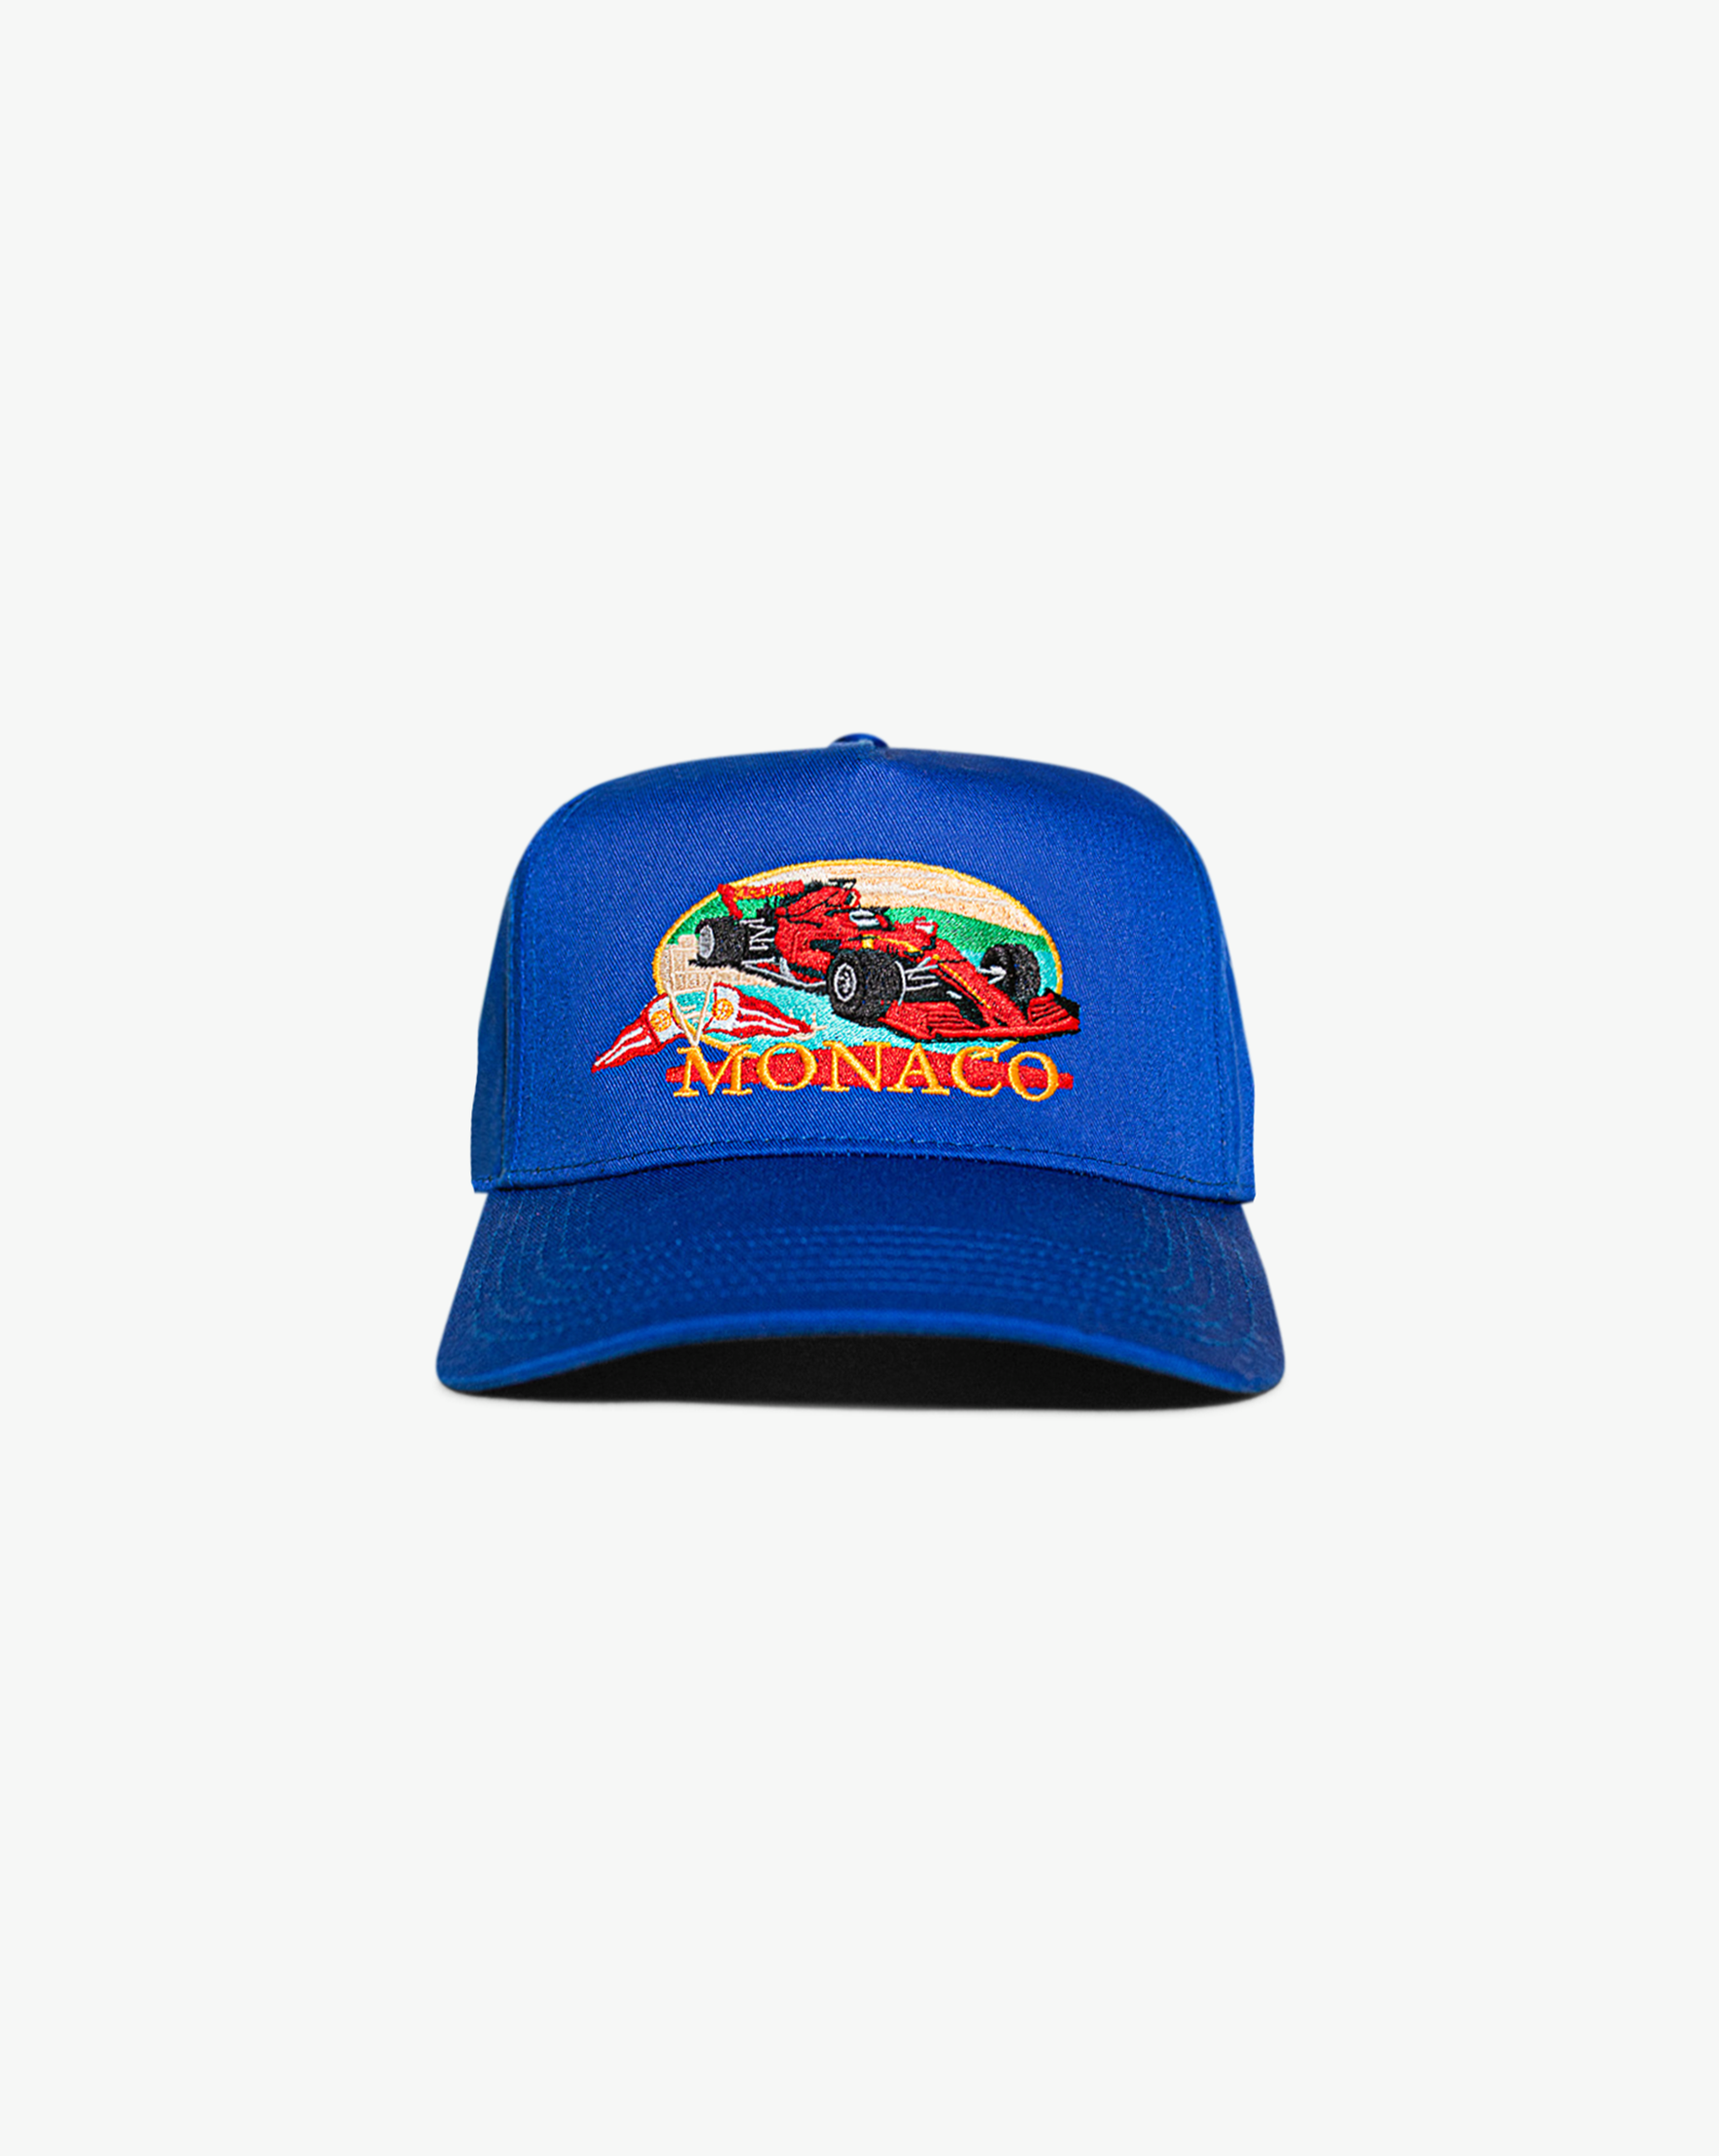 Pirate Monaco Racing Hat (Ocean Blue)